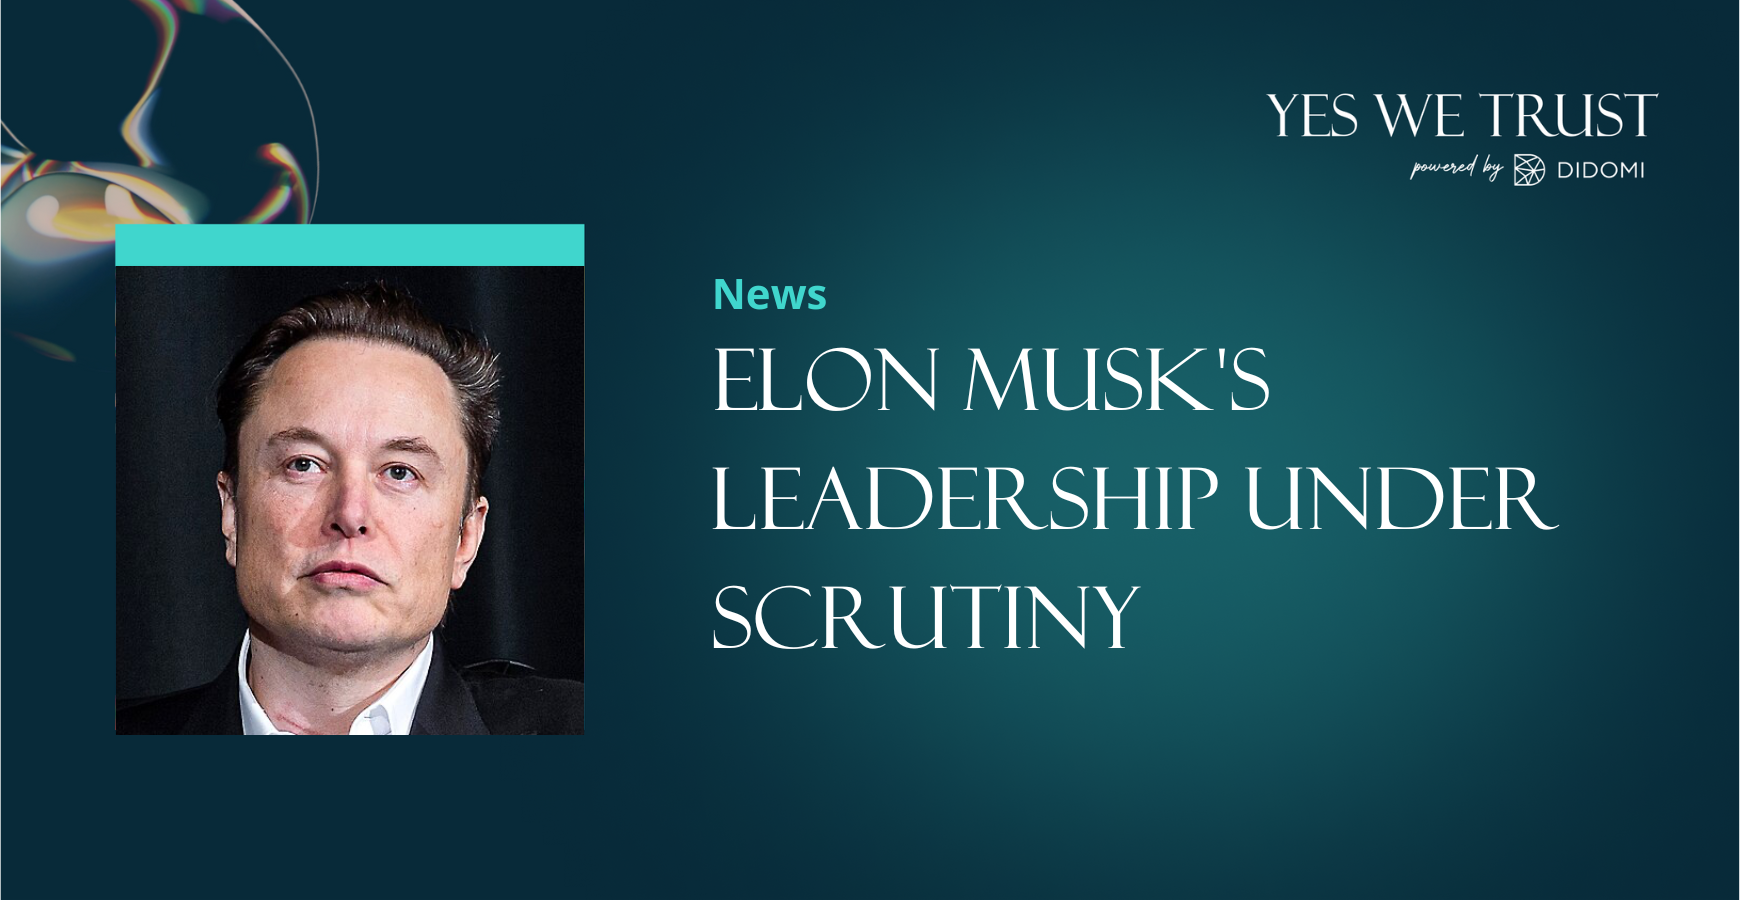 Elon Musk's leadership under scrutiny